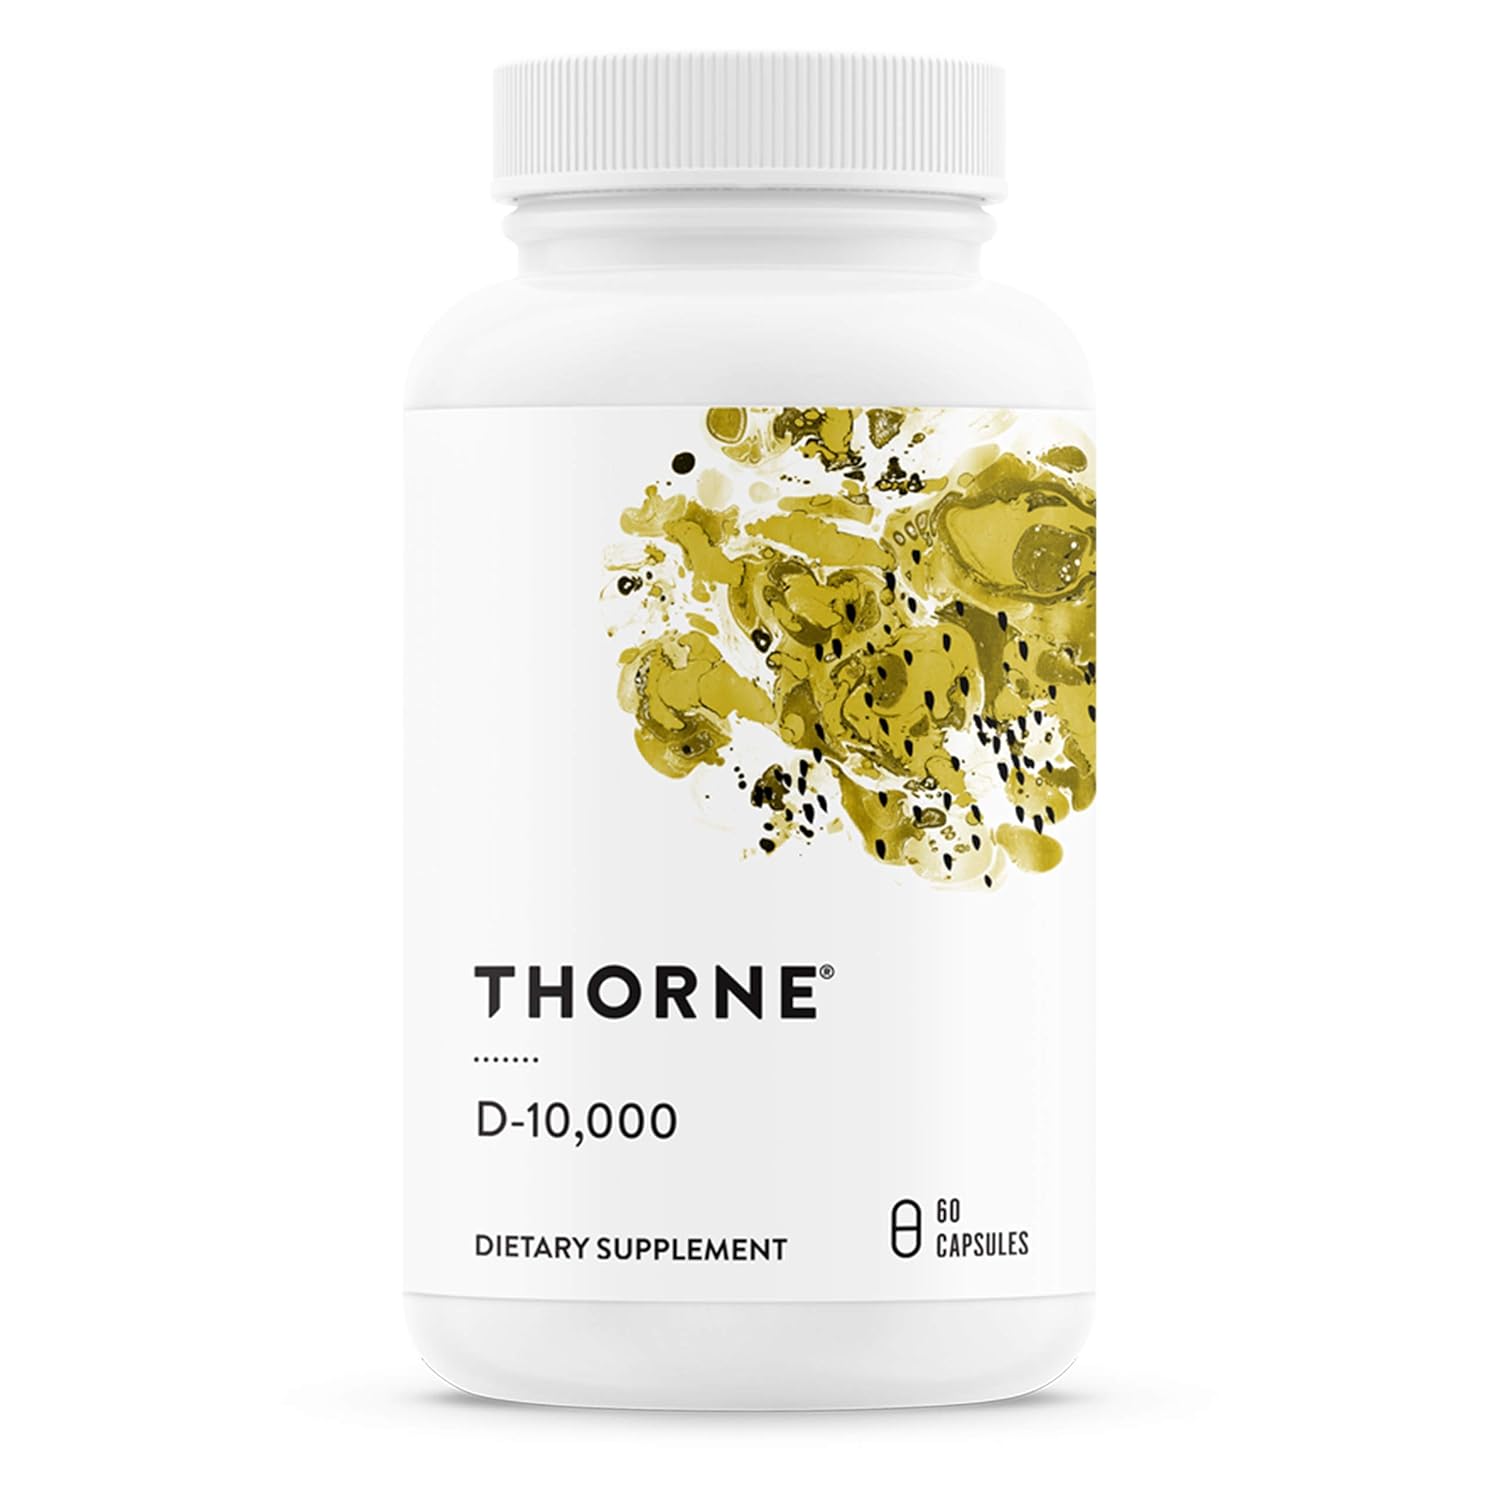 Витамин D3 Thorne D-10,000 10 000 МЕ, 60 капсул thorne research d 10 000 250 мкг 10 000 ме 60 капсул